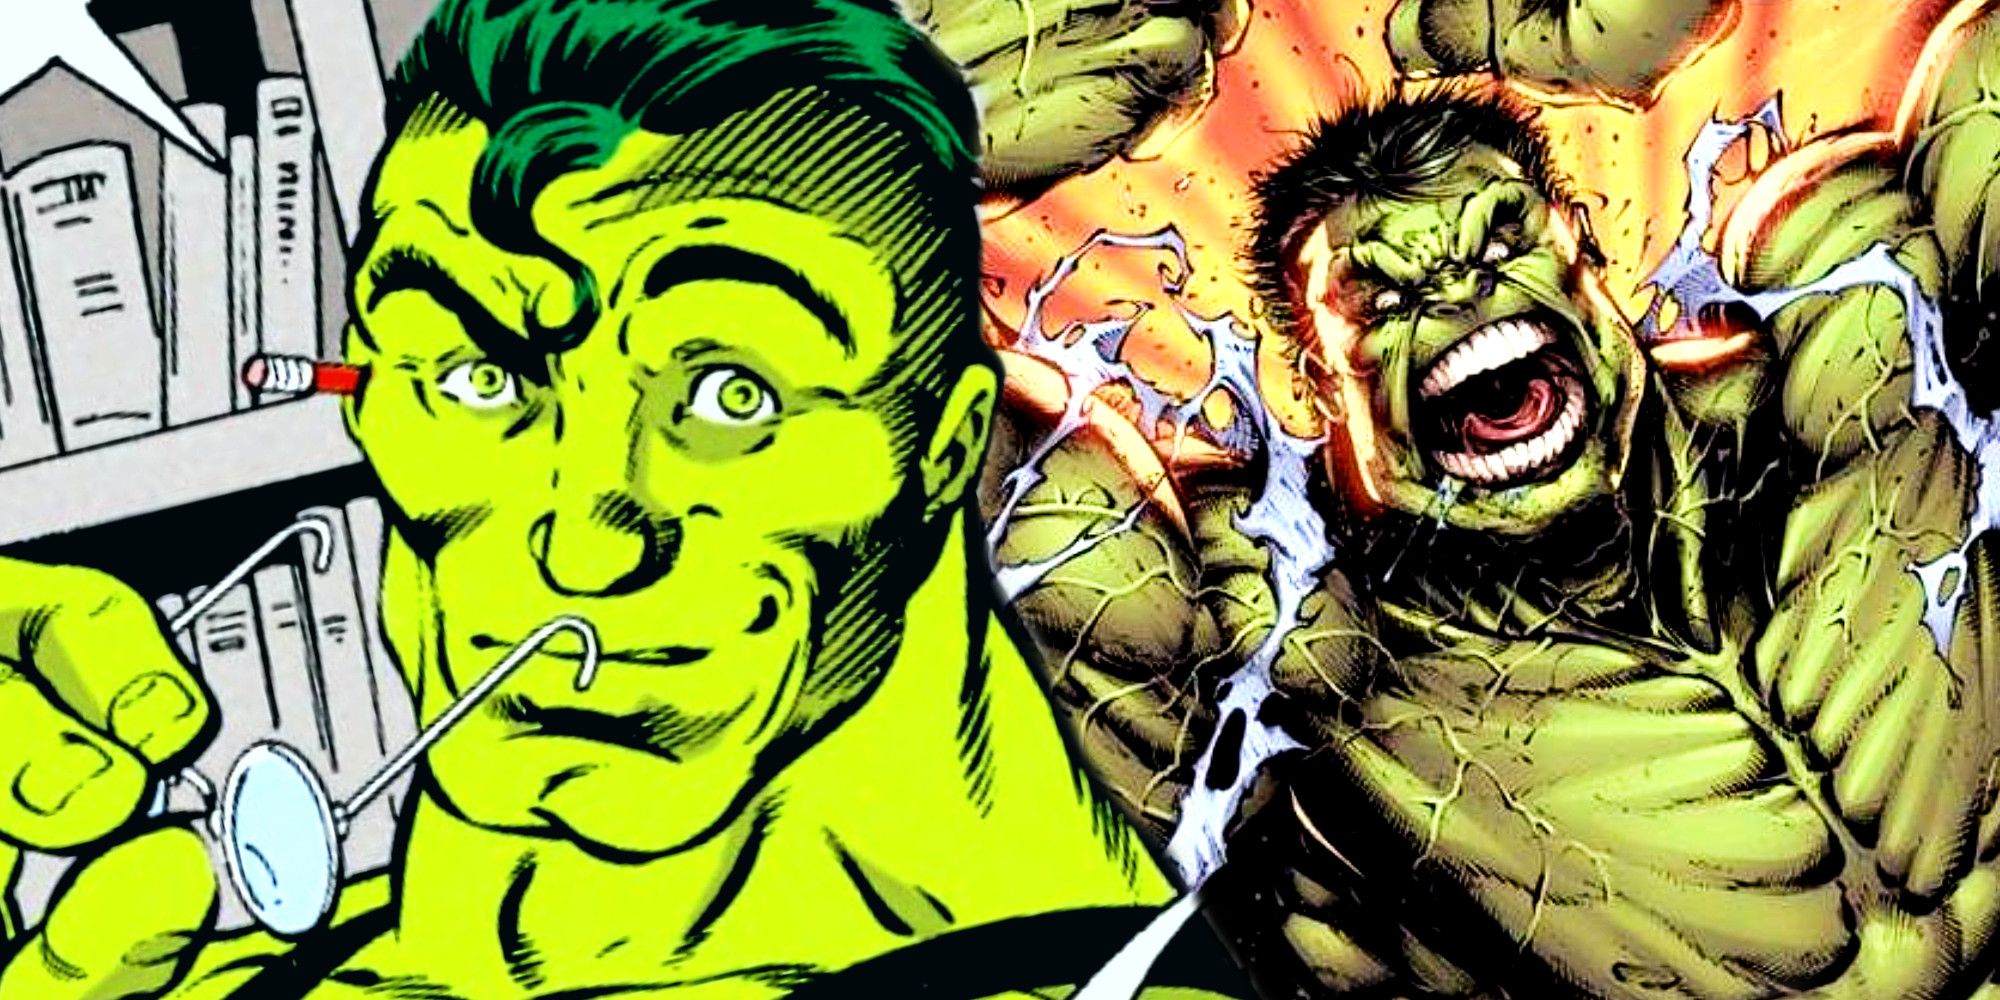 Professor Hulk and Angry Hulk in Marvel Comics